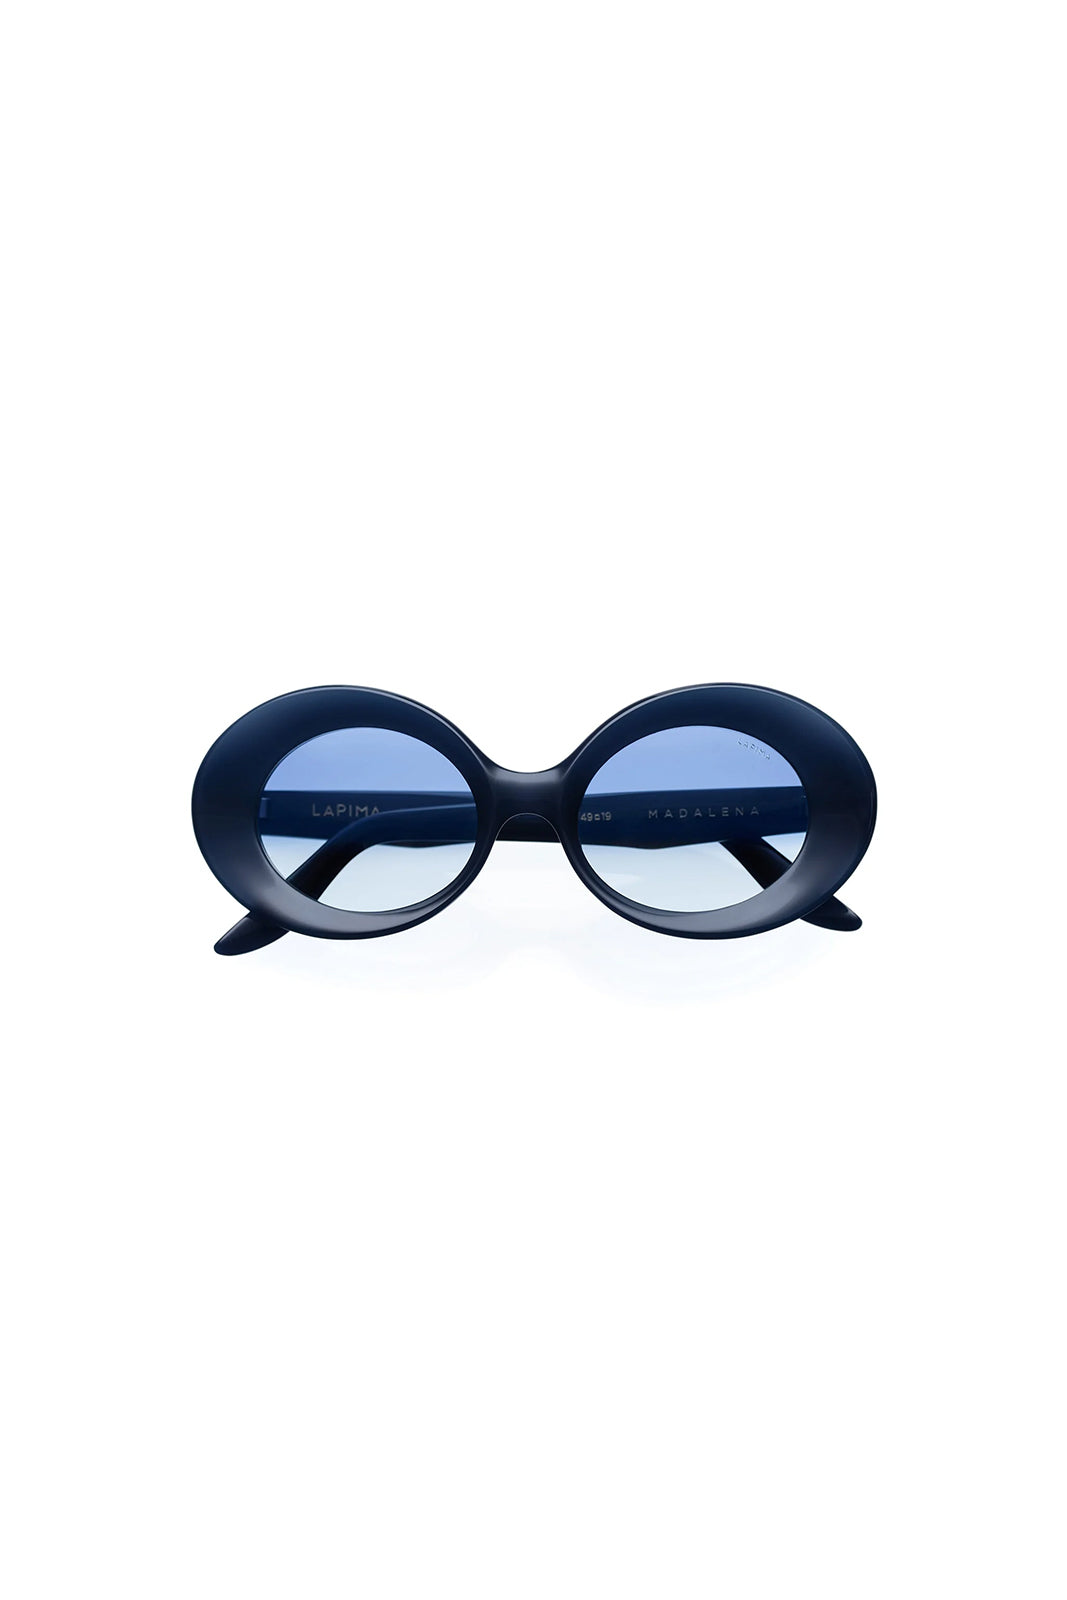 Madalena Atlantic Sunglasses